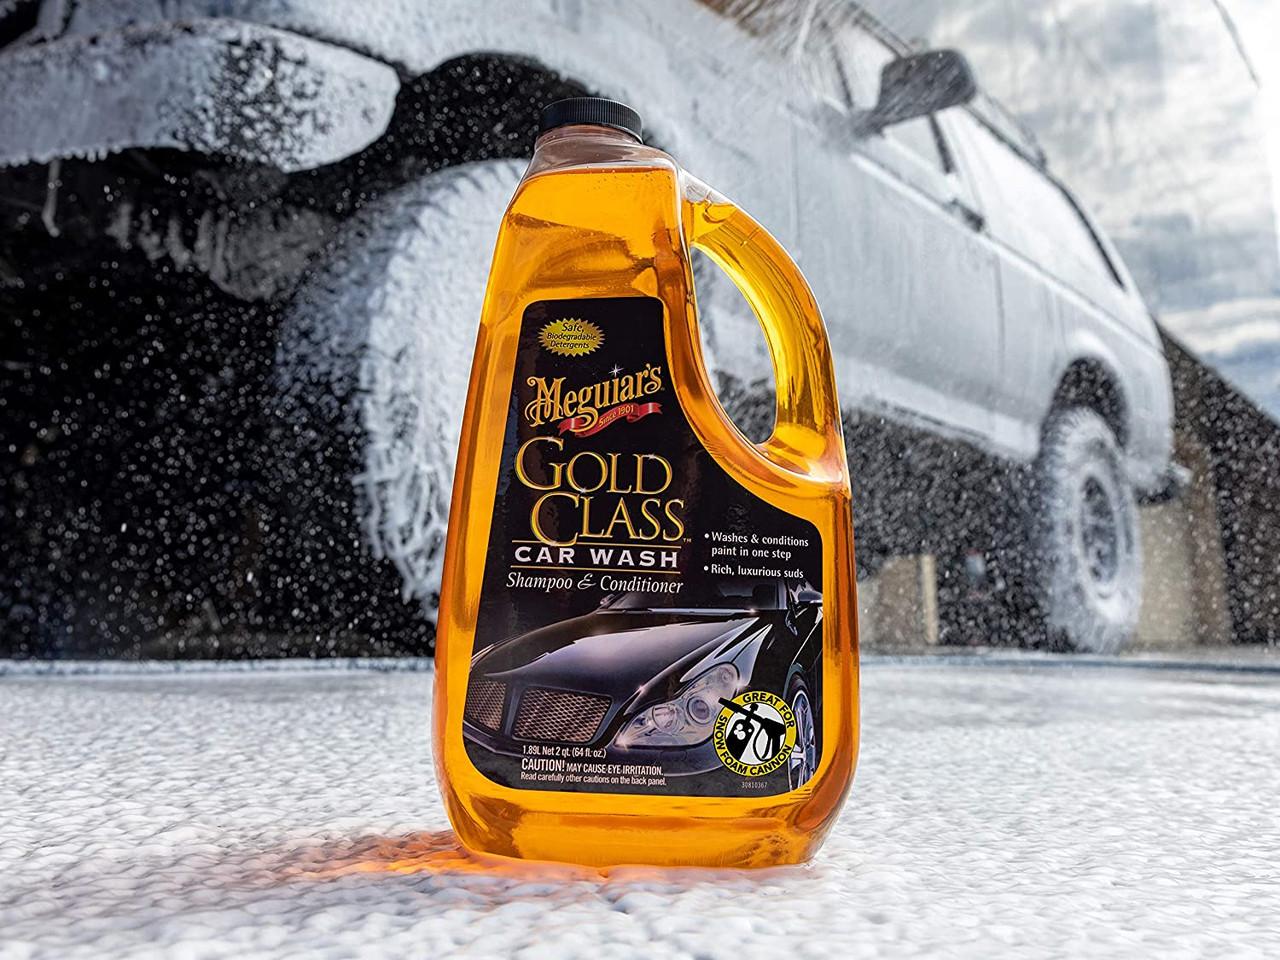 meguiars gold car wash shampoo and conditioner